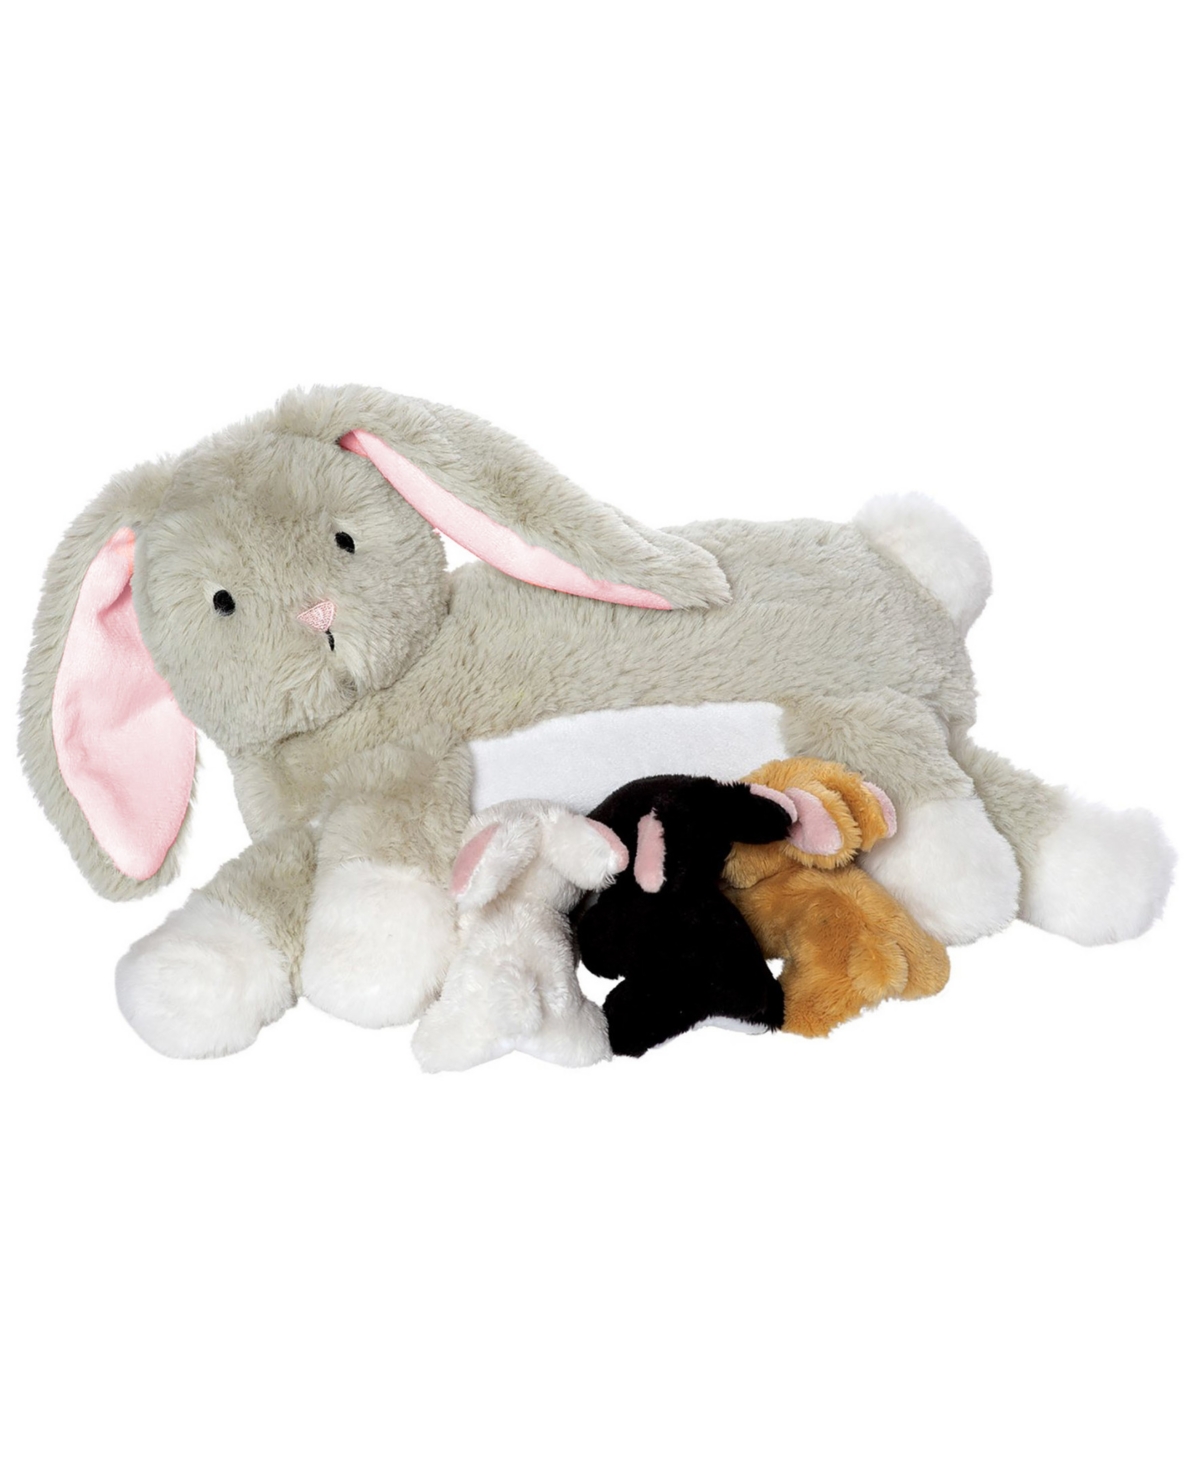 Manhattan Toy Company Kids' Nursing Nola Nurturing Rabbit Stuffed Animal With Plush Baby Bunnies In Multicolor